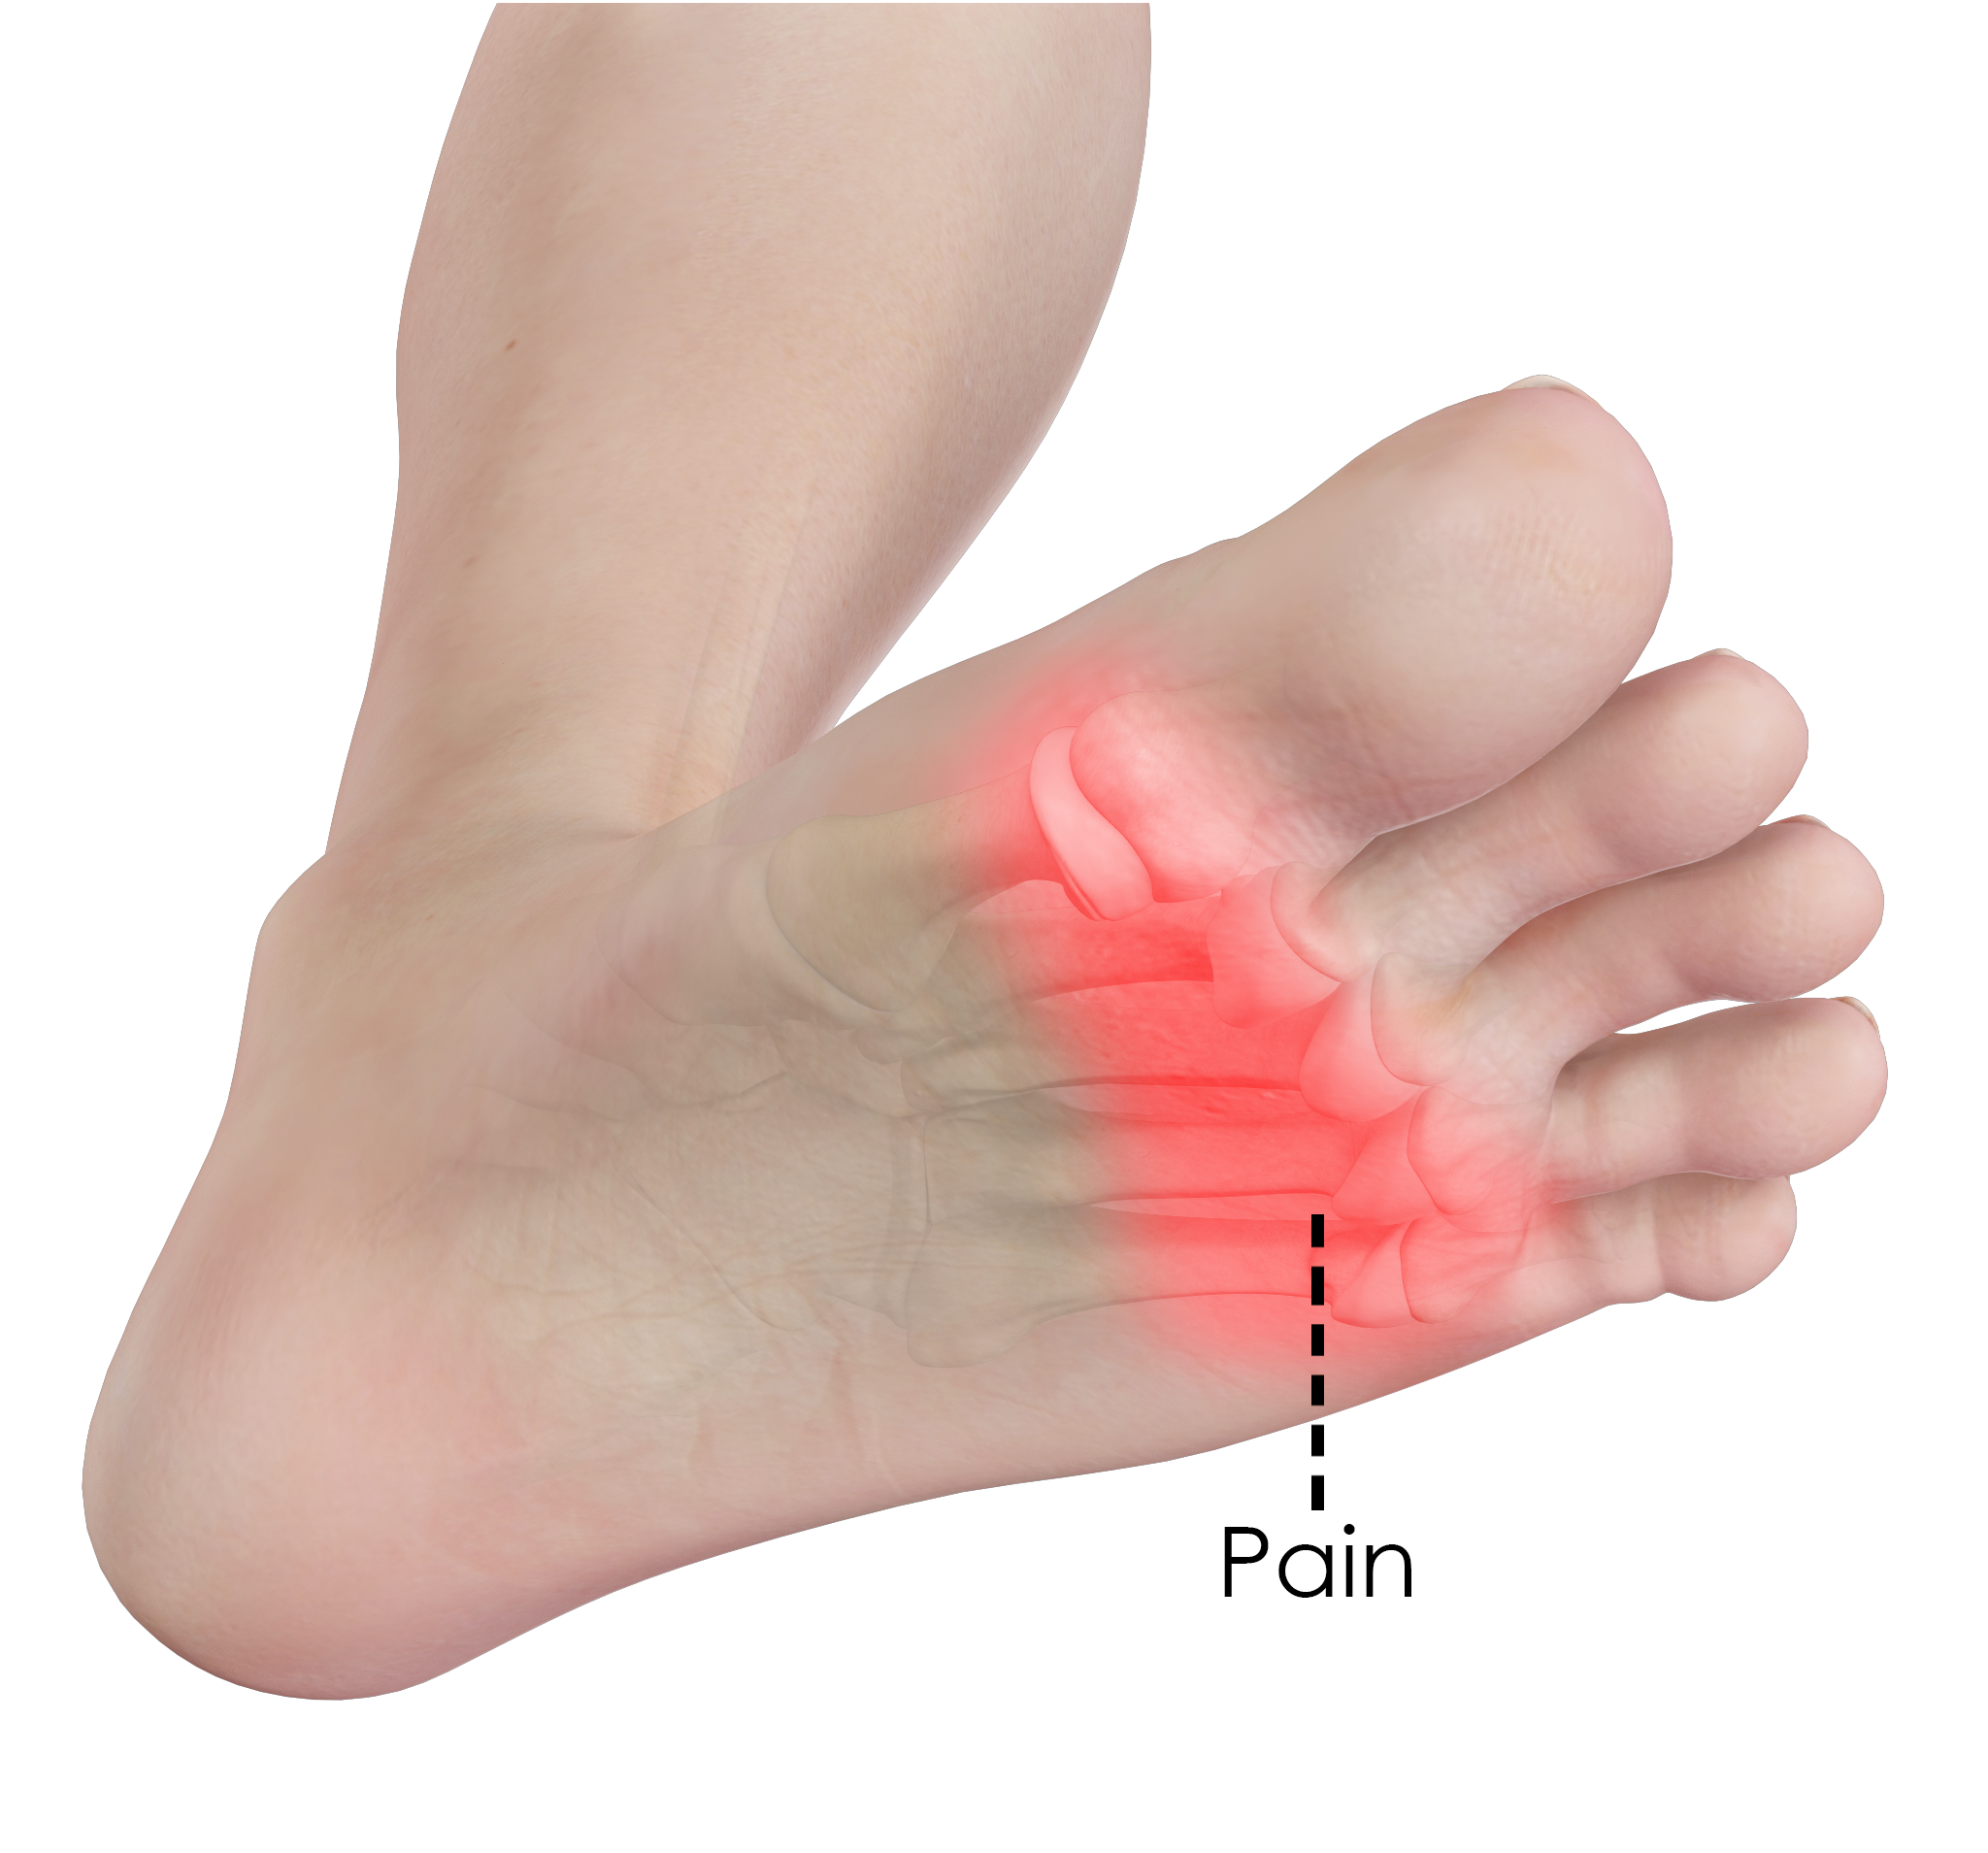 bottom of feet hurt when walking